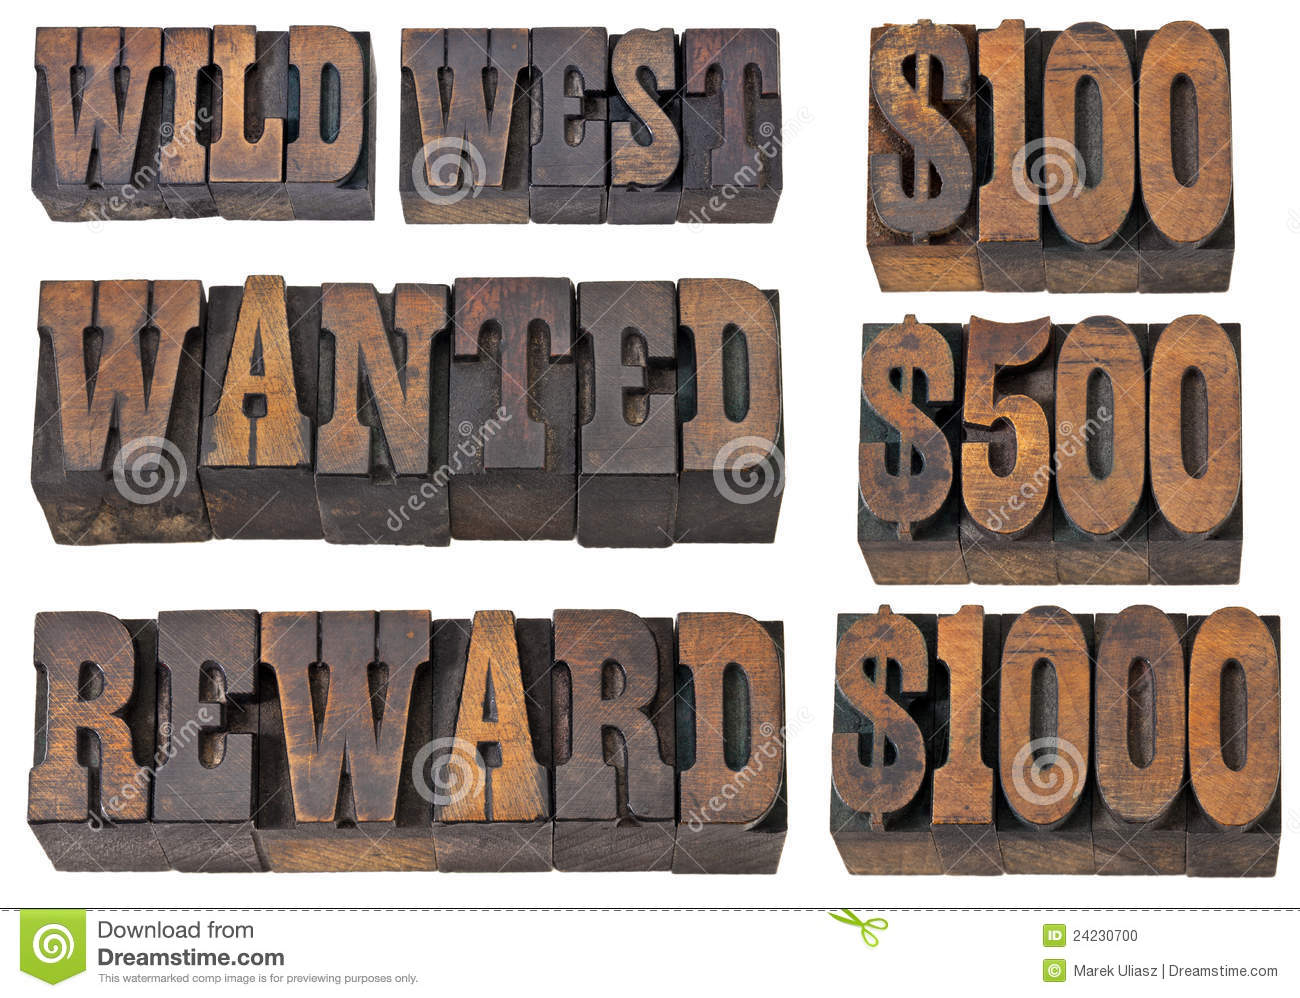 Reward Wanted Old Western Fonts